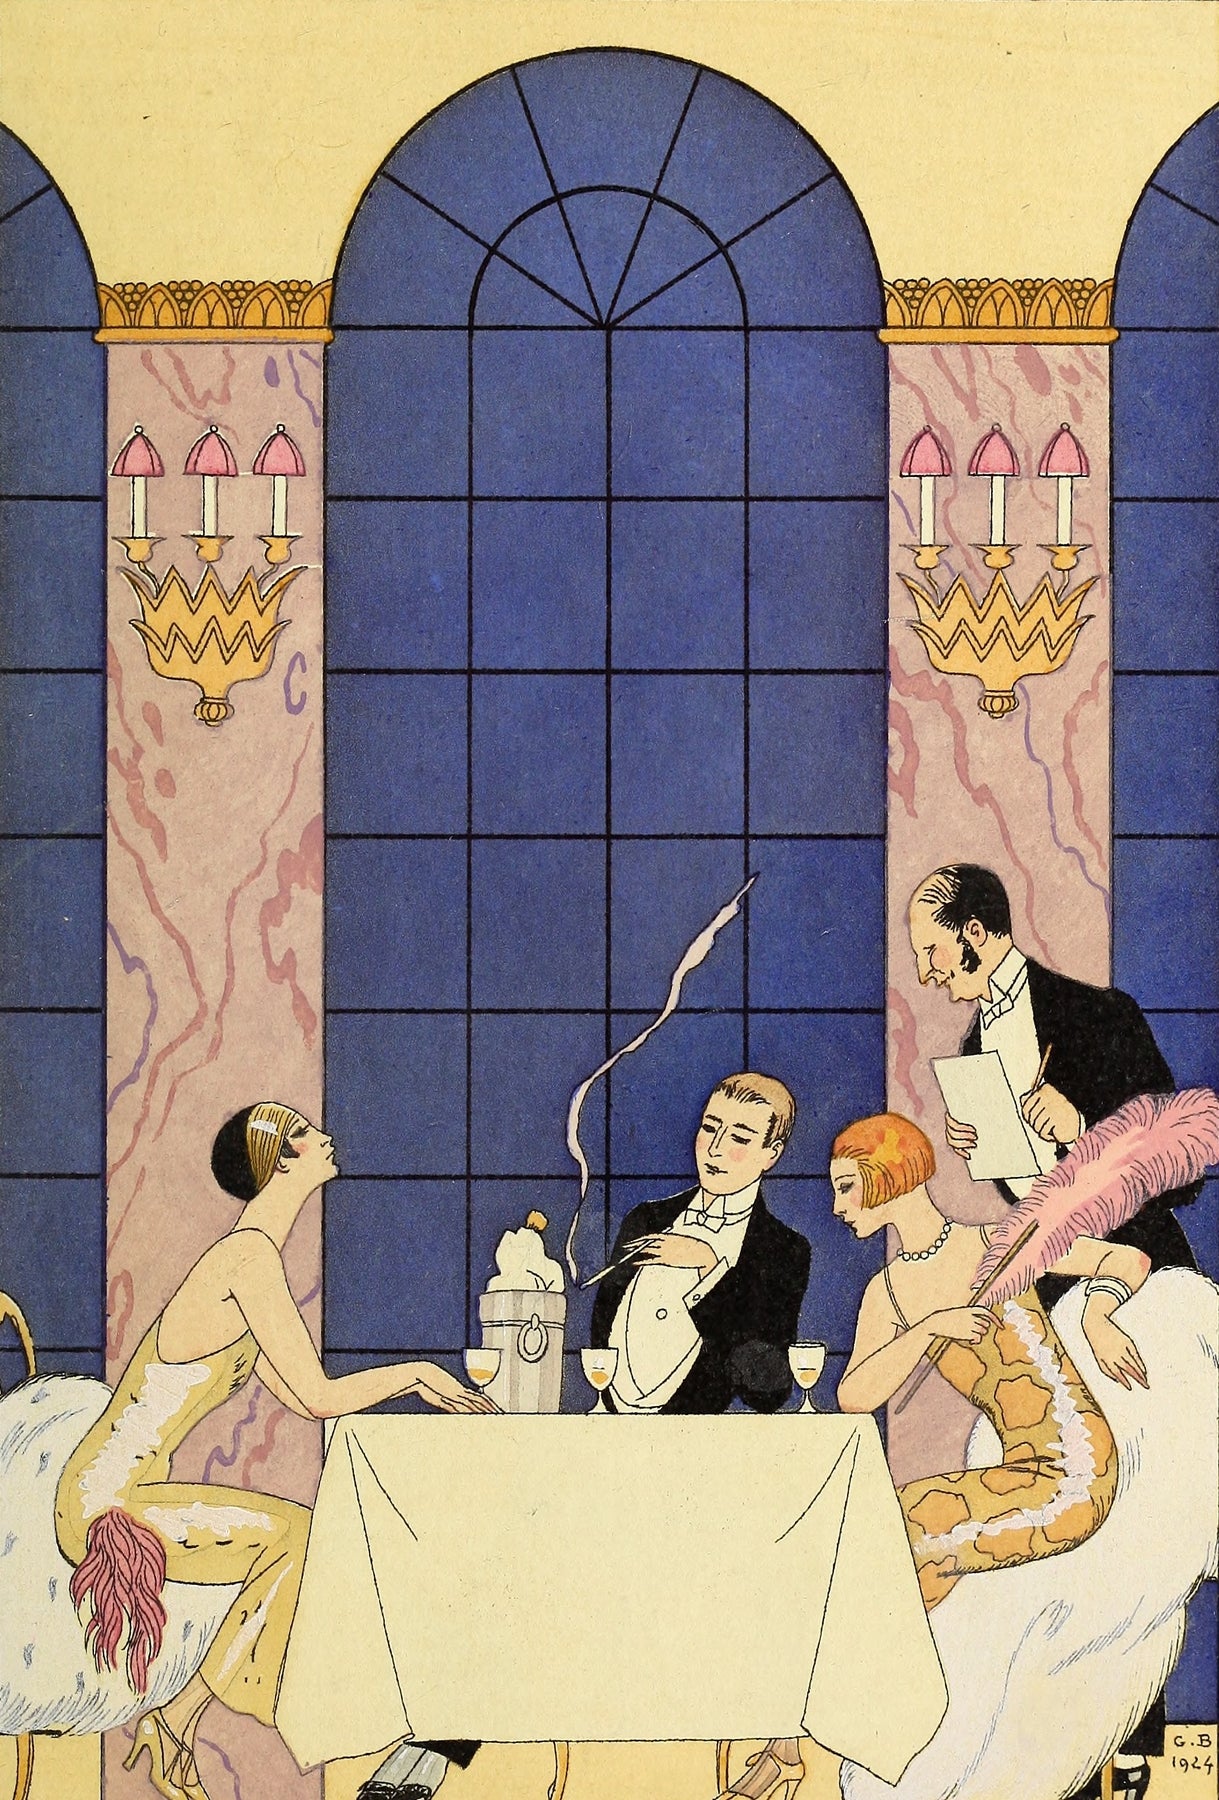 La Gourmandise (1925) | Art deco paintings | George Barbier Posters, Prints, & Visual Artwork The Trumpet Shop   